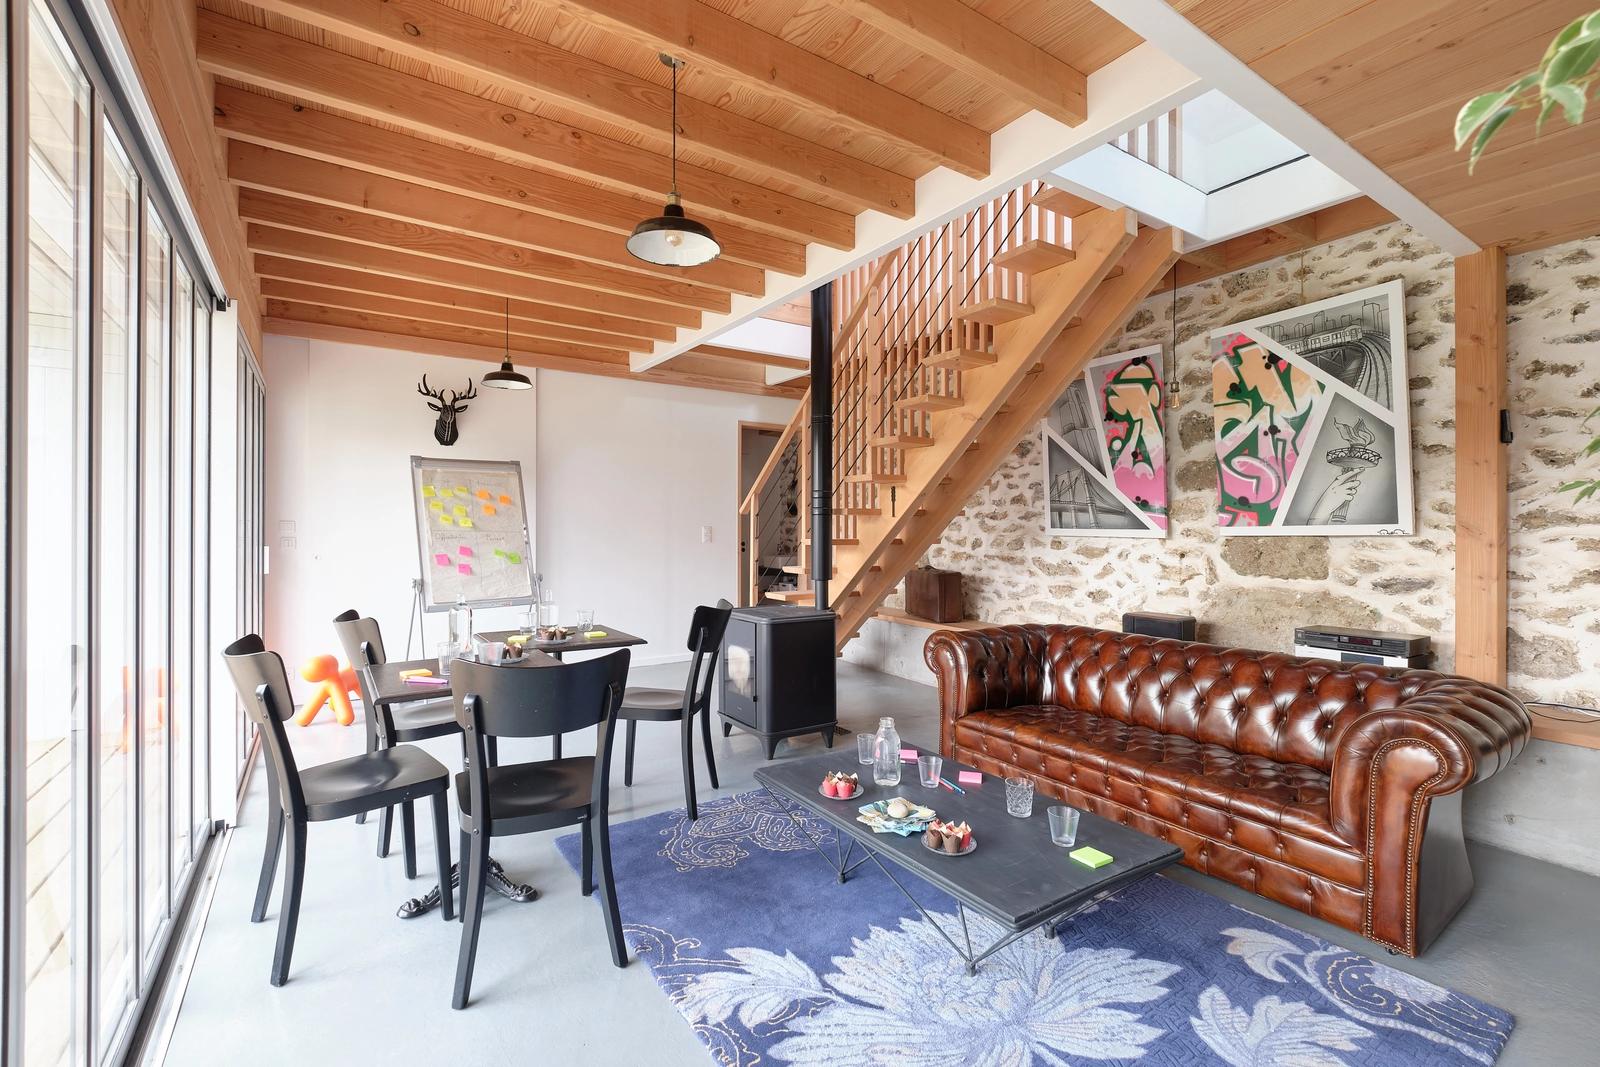 Sala dentro Casa "loft" de madera diseñada por un arquitecto cerca de París - 0